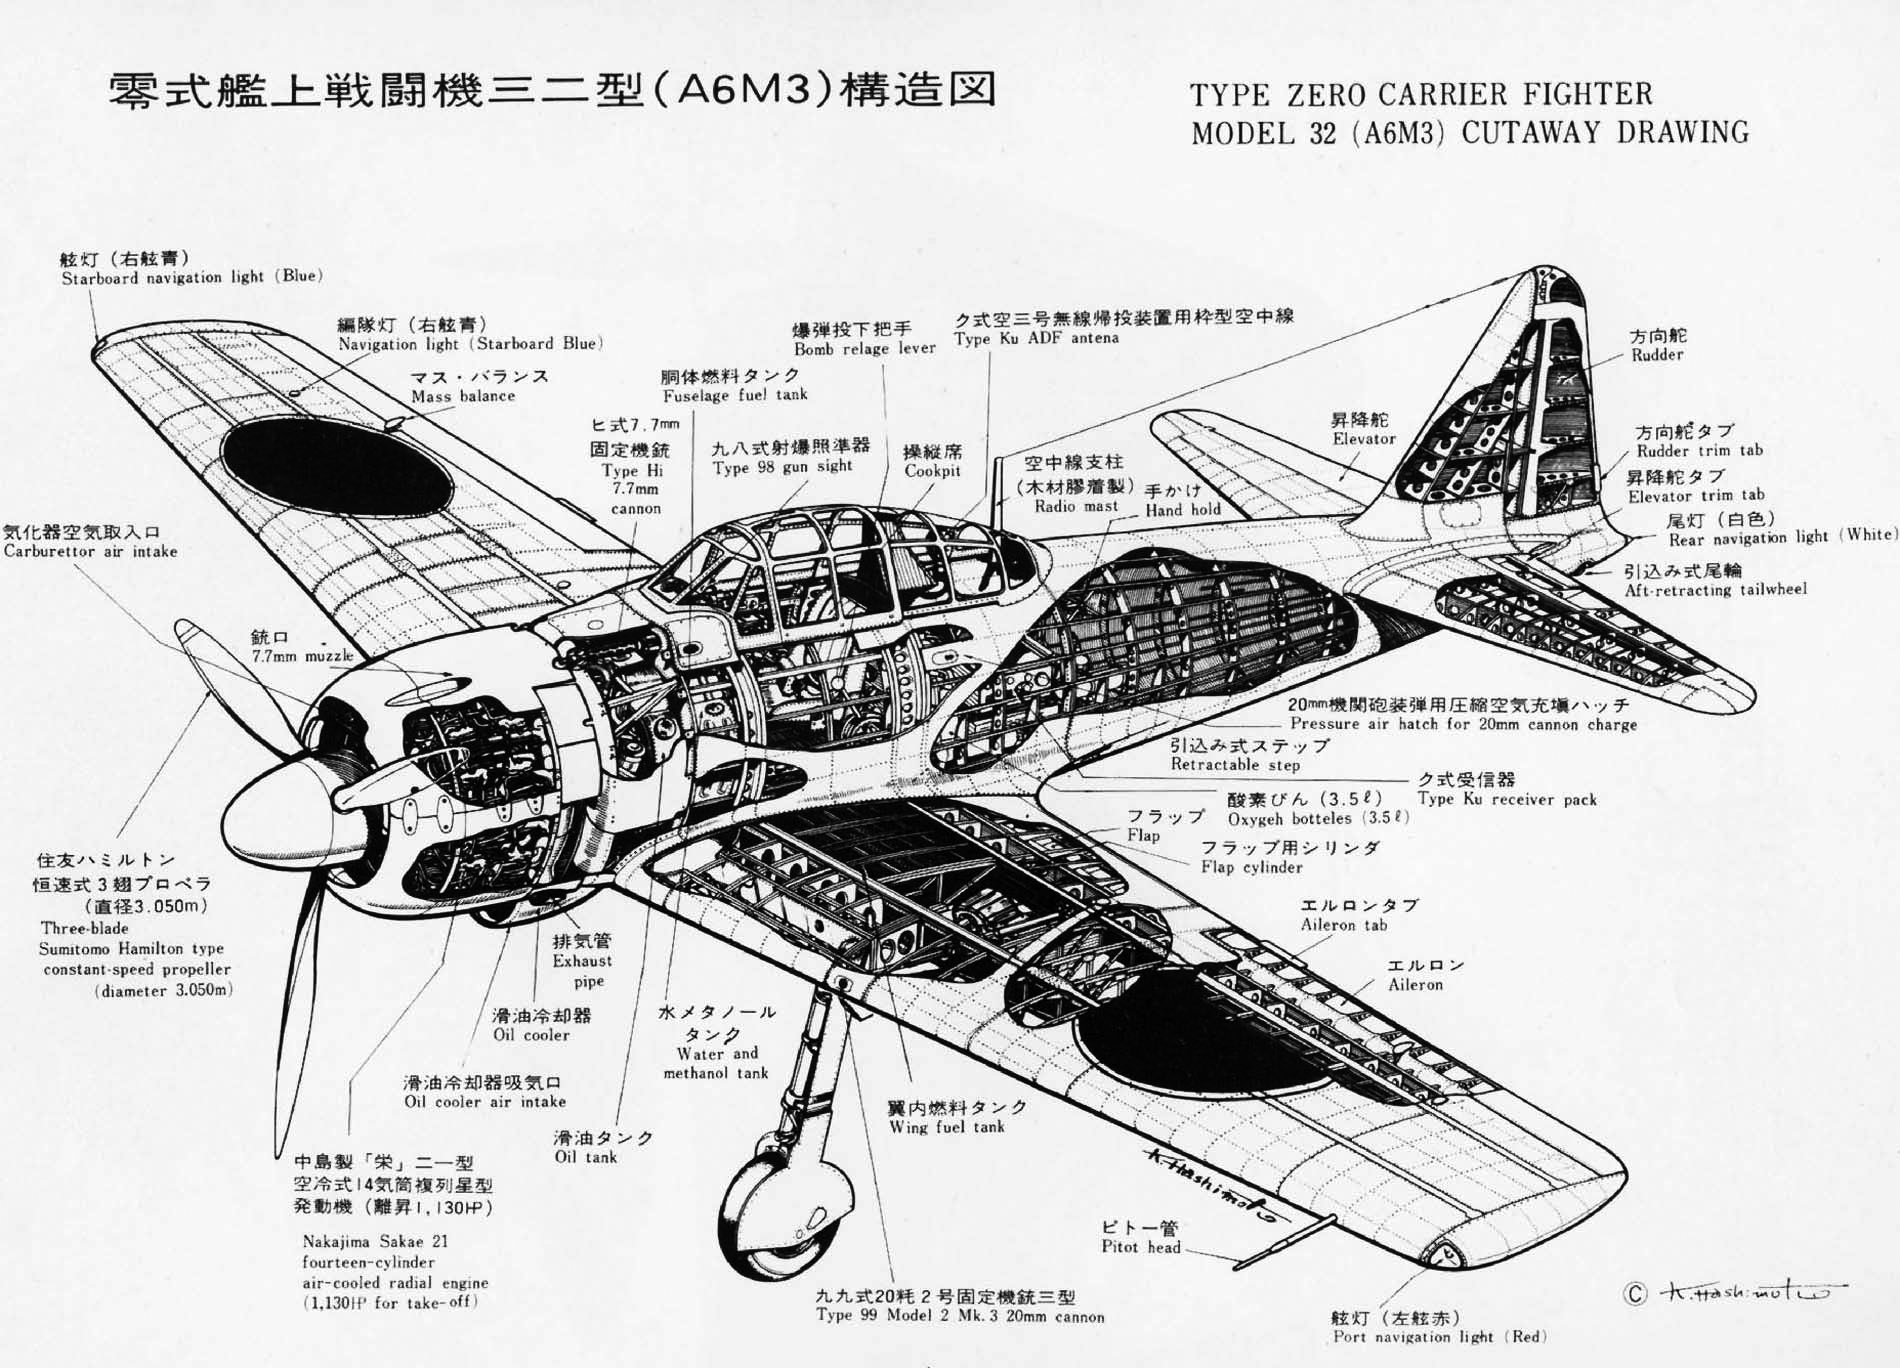 A6M3 model 32 cutaway